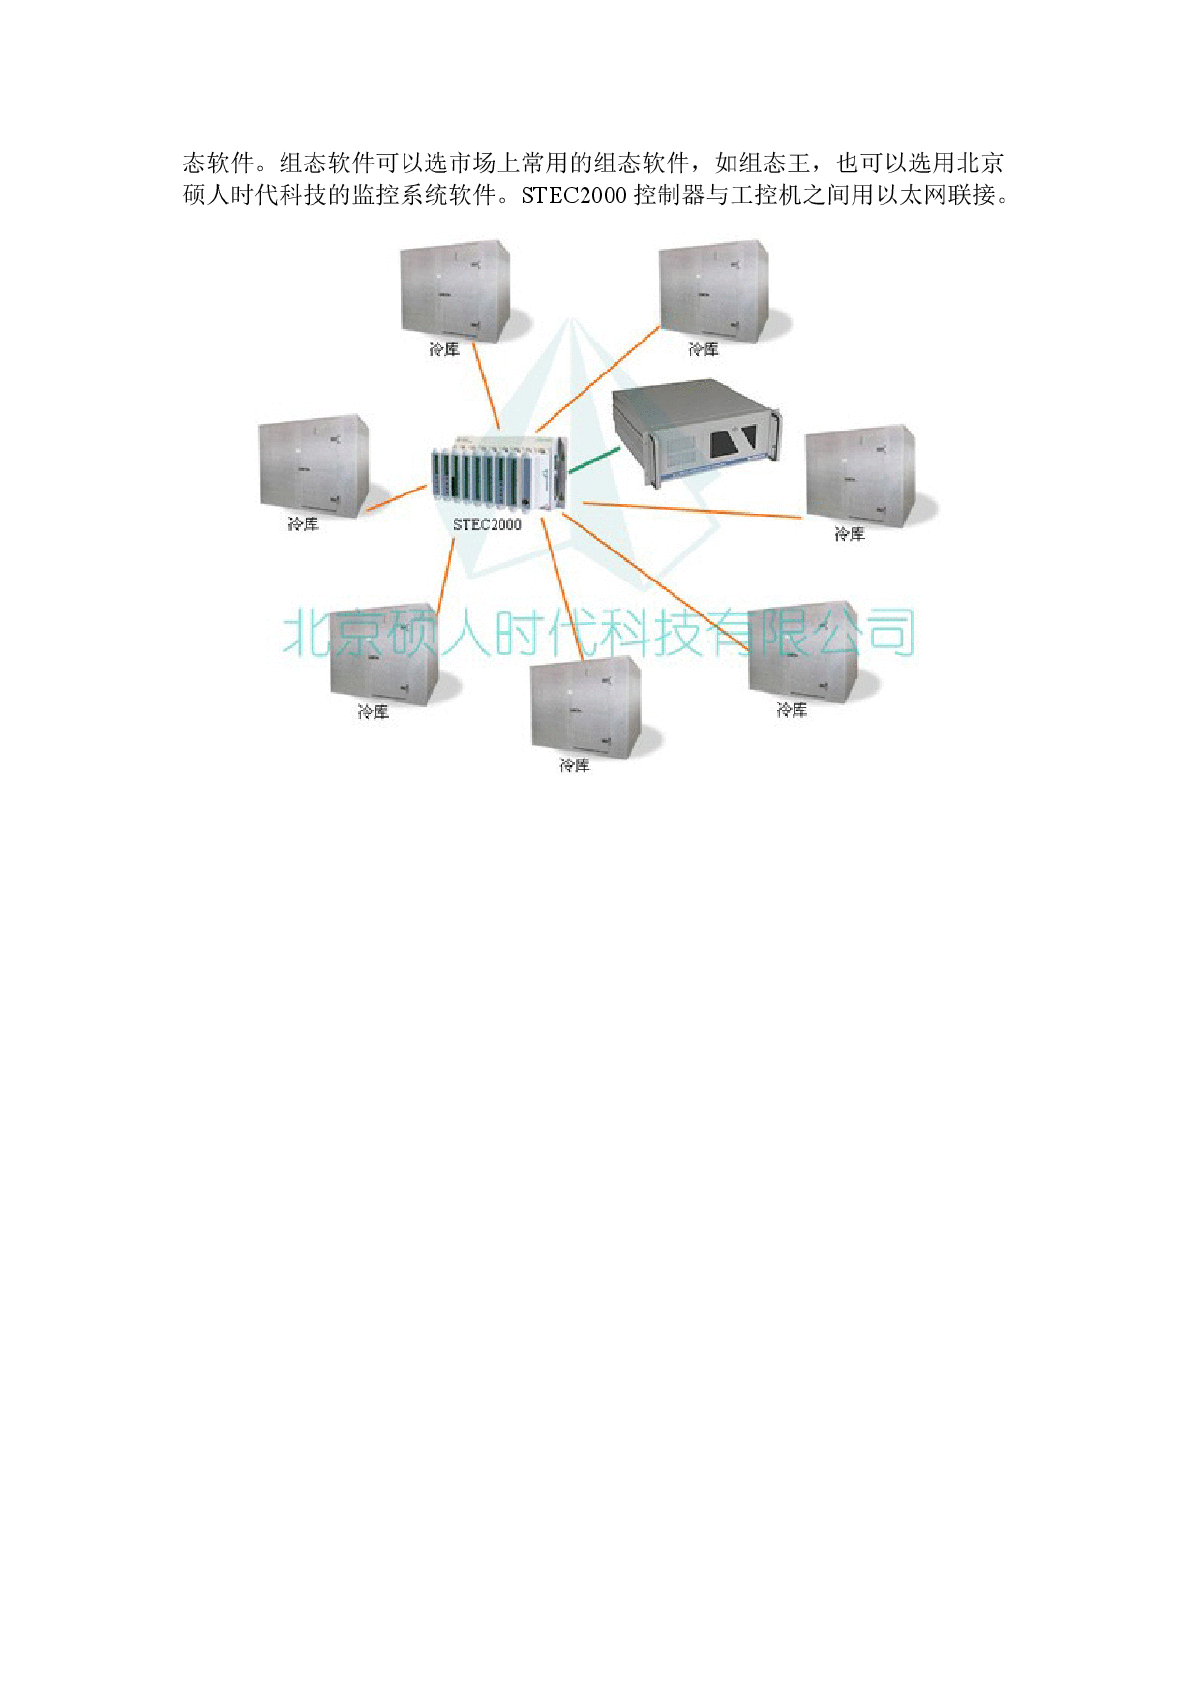 STEC系列控制器在冷库监控系统中的应用-图二